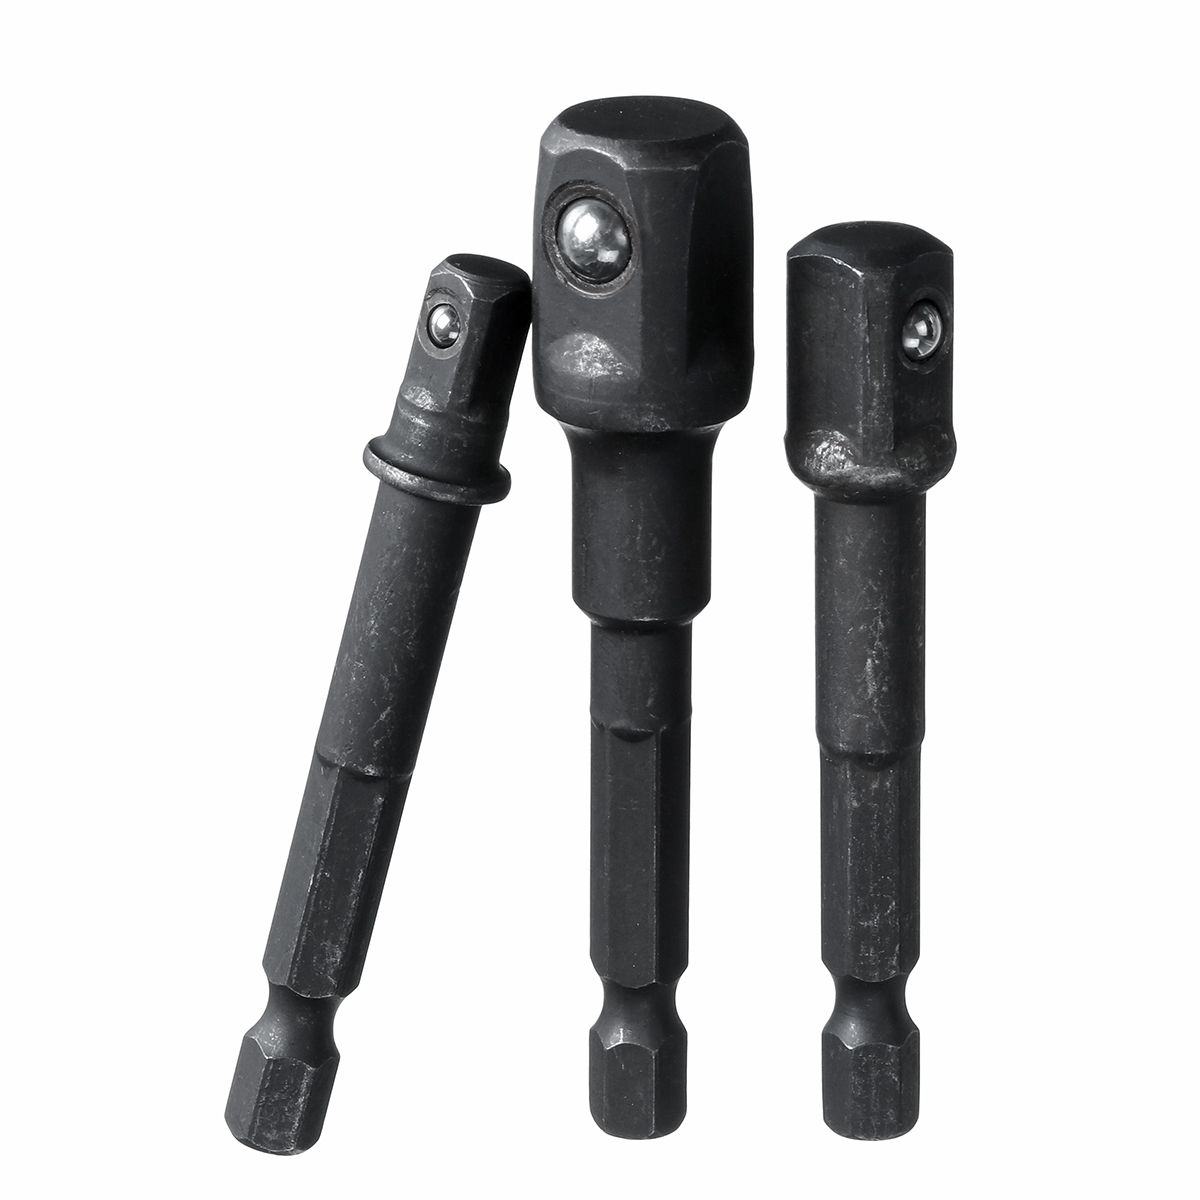 3pcs-6573mm-14-Inch-Socket-Adapter-Impact-Hex-Shank-Drill-Bit-Power-Extension-Bar-1629506